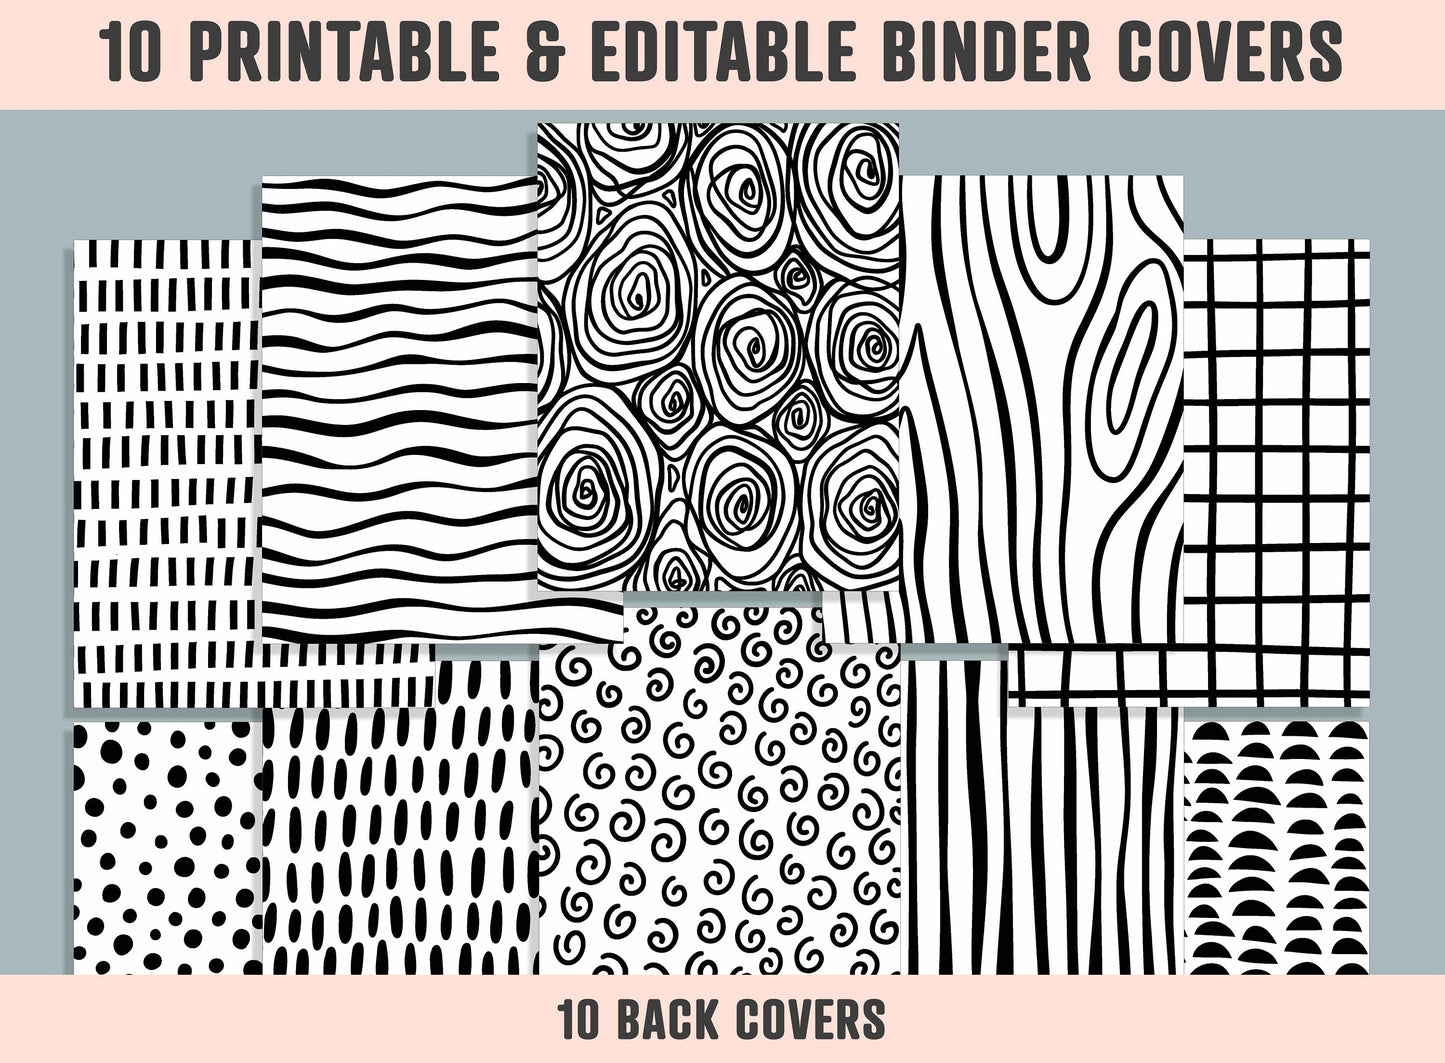 Abstract Vector Binder Cover, 10 Printable/Editable Binder Covers+Spines, Black & White Planner Template, Teacher/School Binder Label/Insert